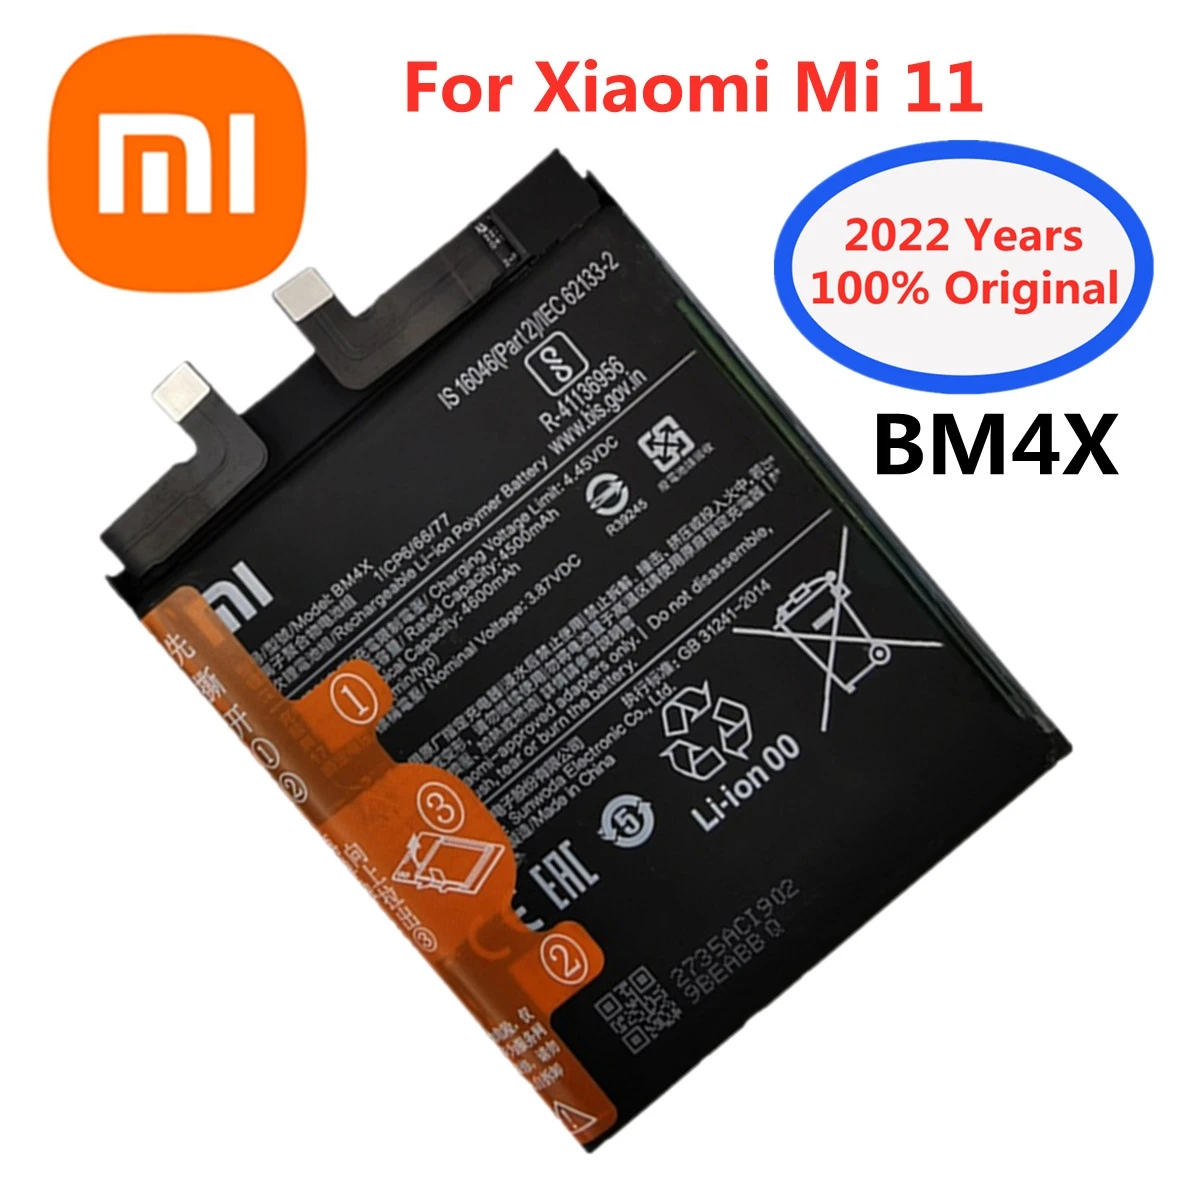 Xiaomi Mi 11 Battery